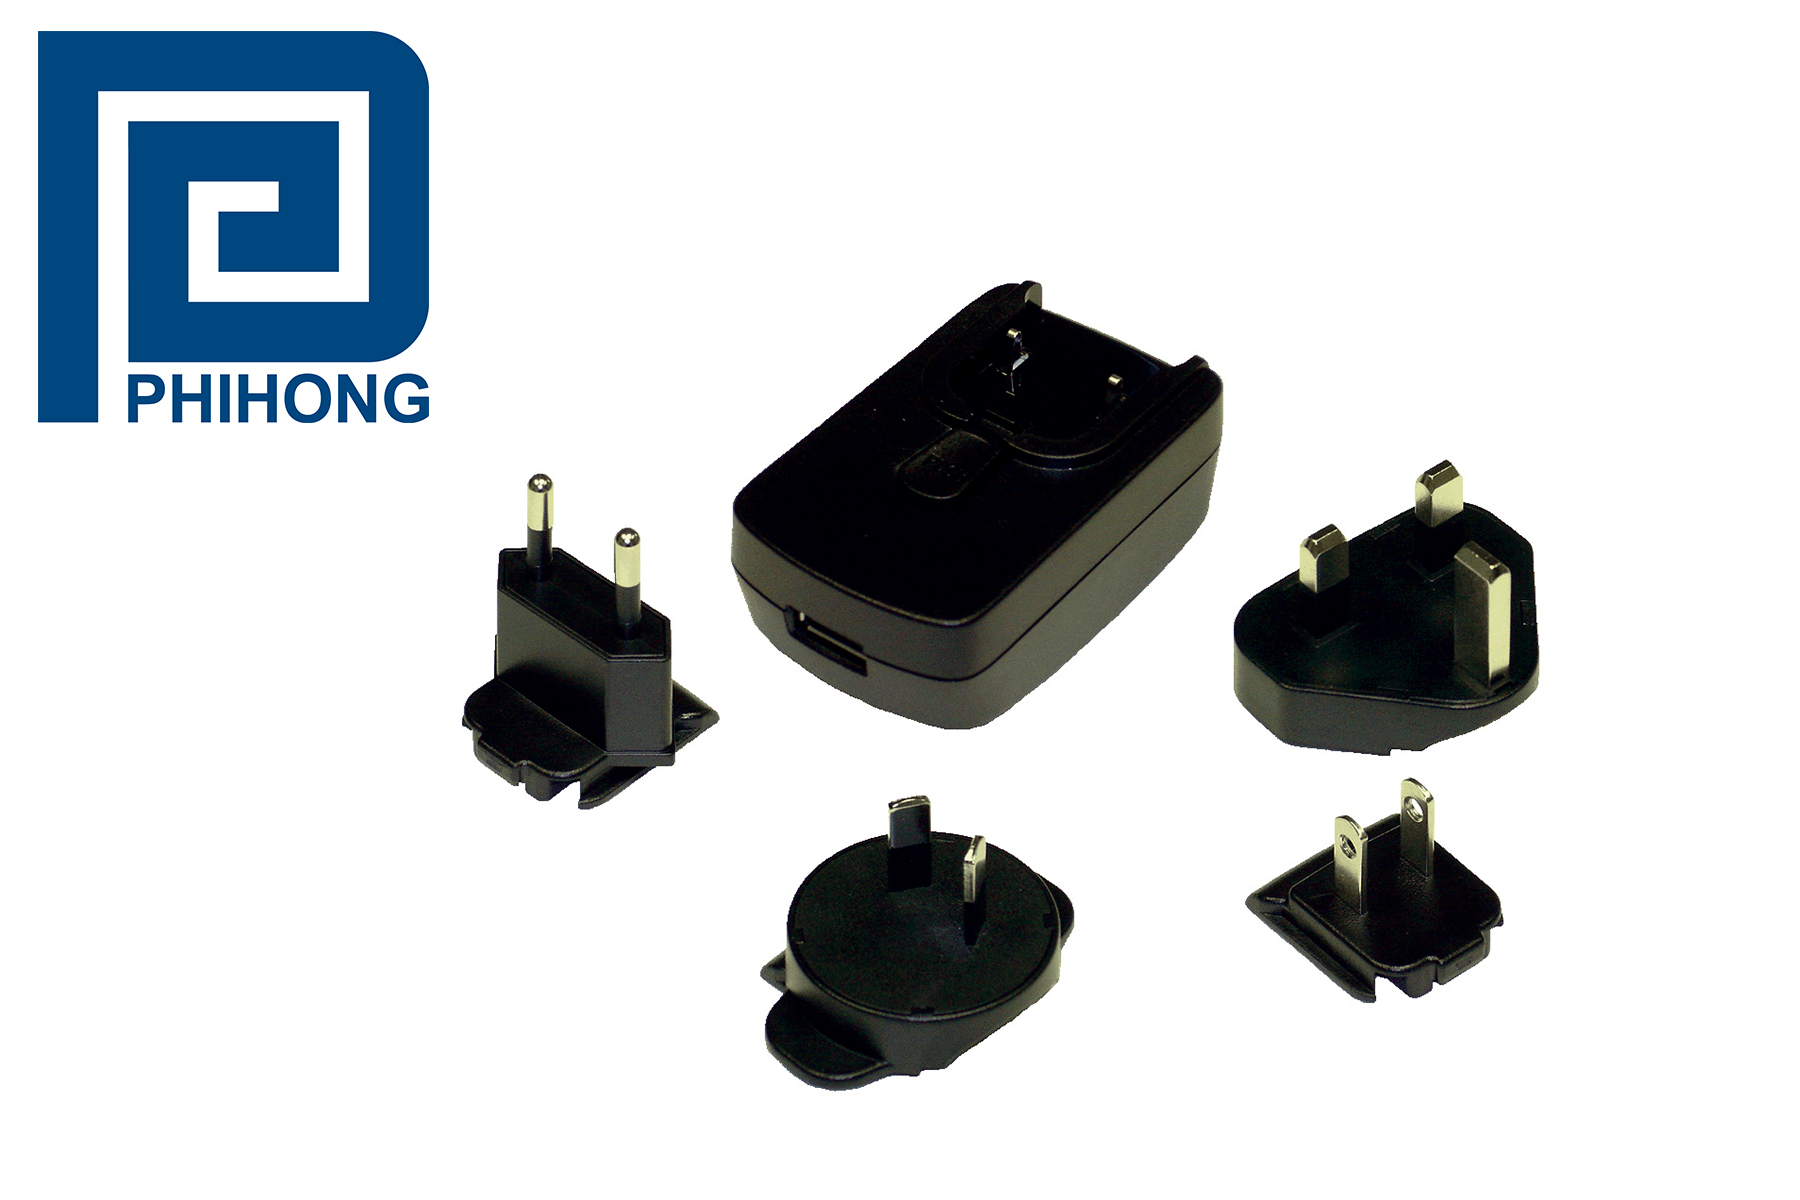 Plug Adapter Compliant to DOE VI Efficiency Standards